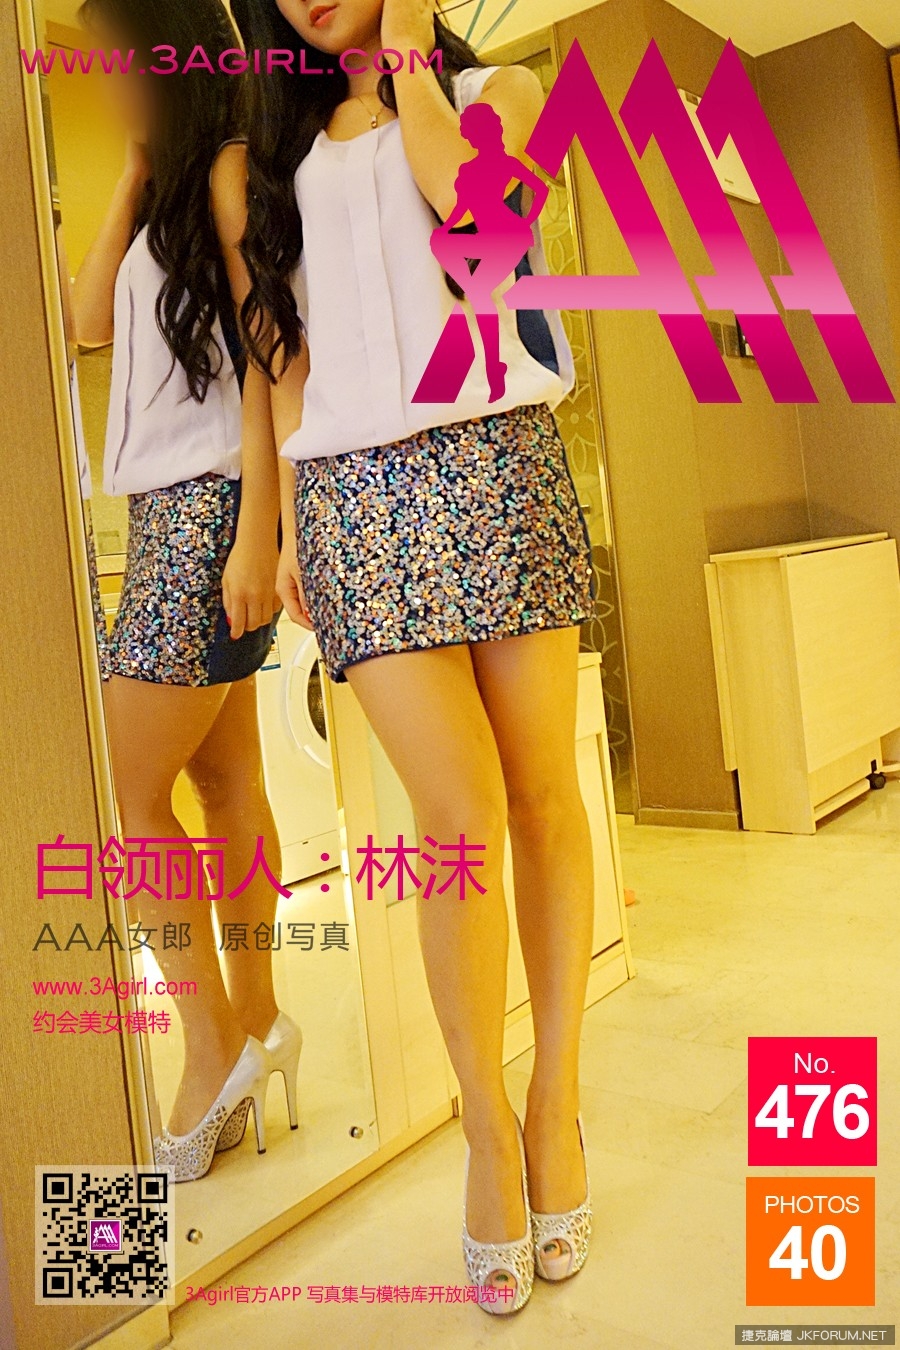 【3Agirl系列】 No.476 AAA女郎 白領麗人-林沫【41P】 - 貼圖 - 絲襪美腿 -